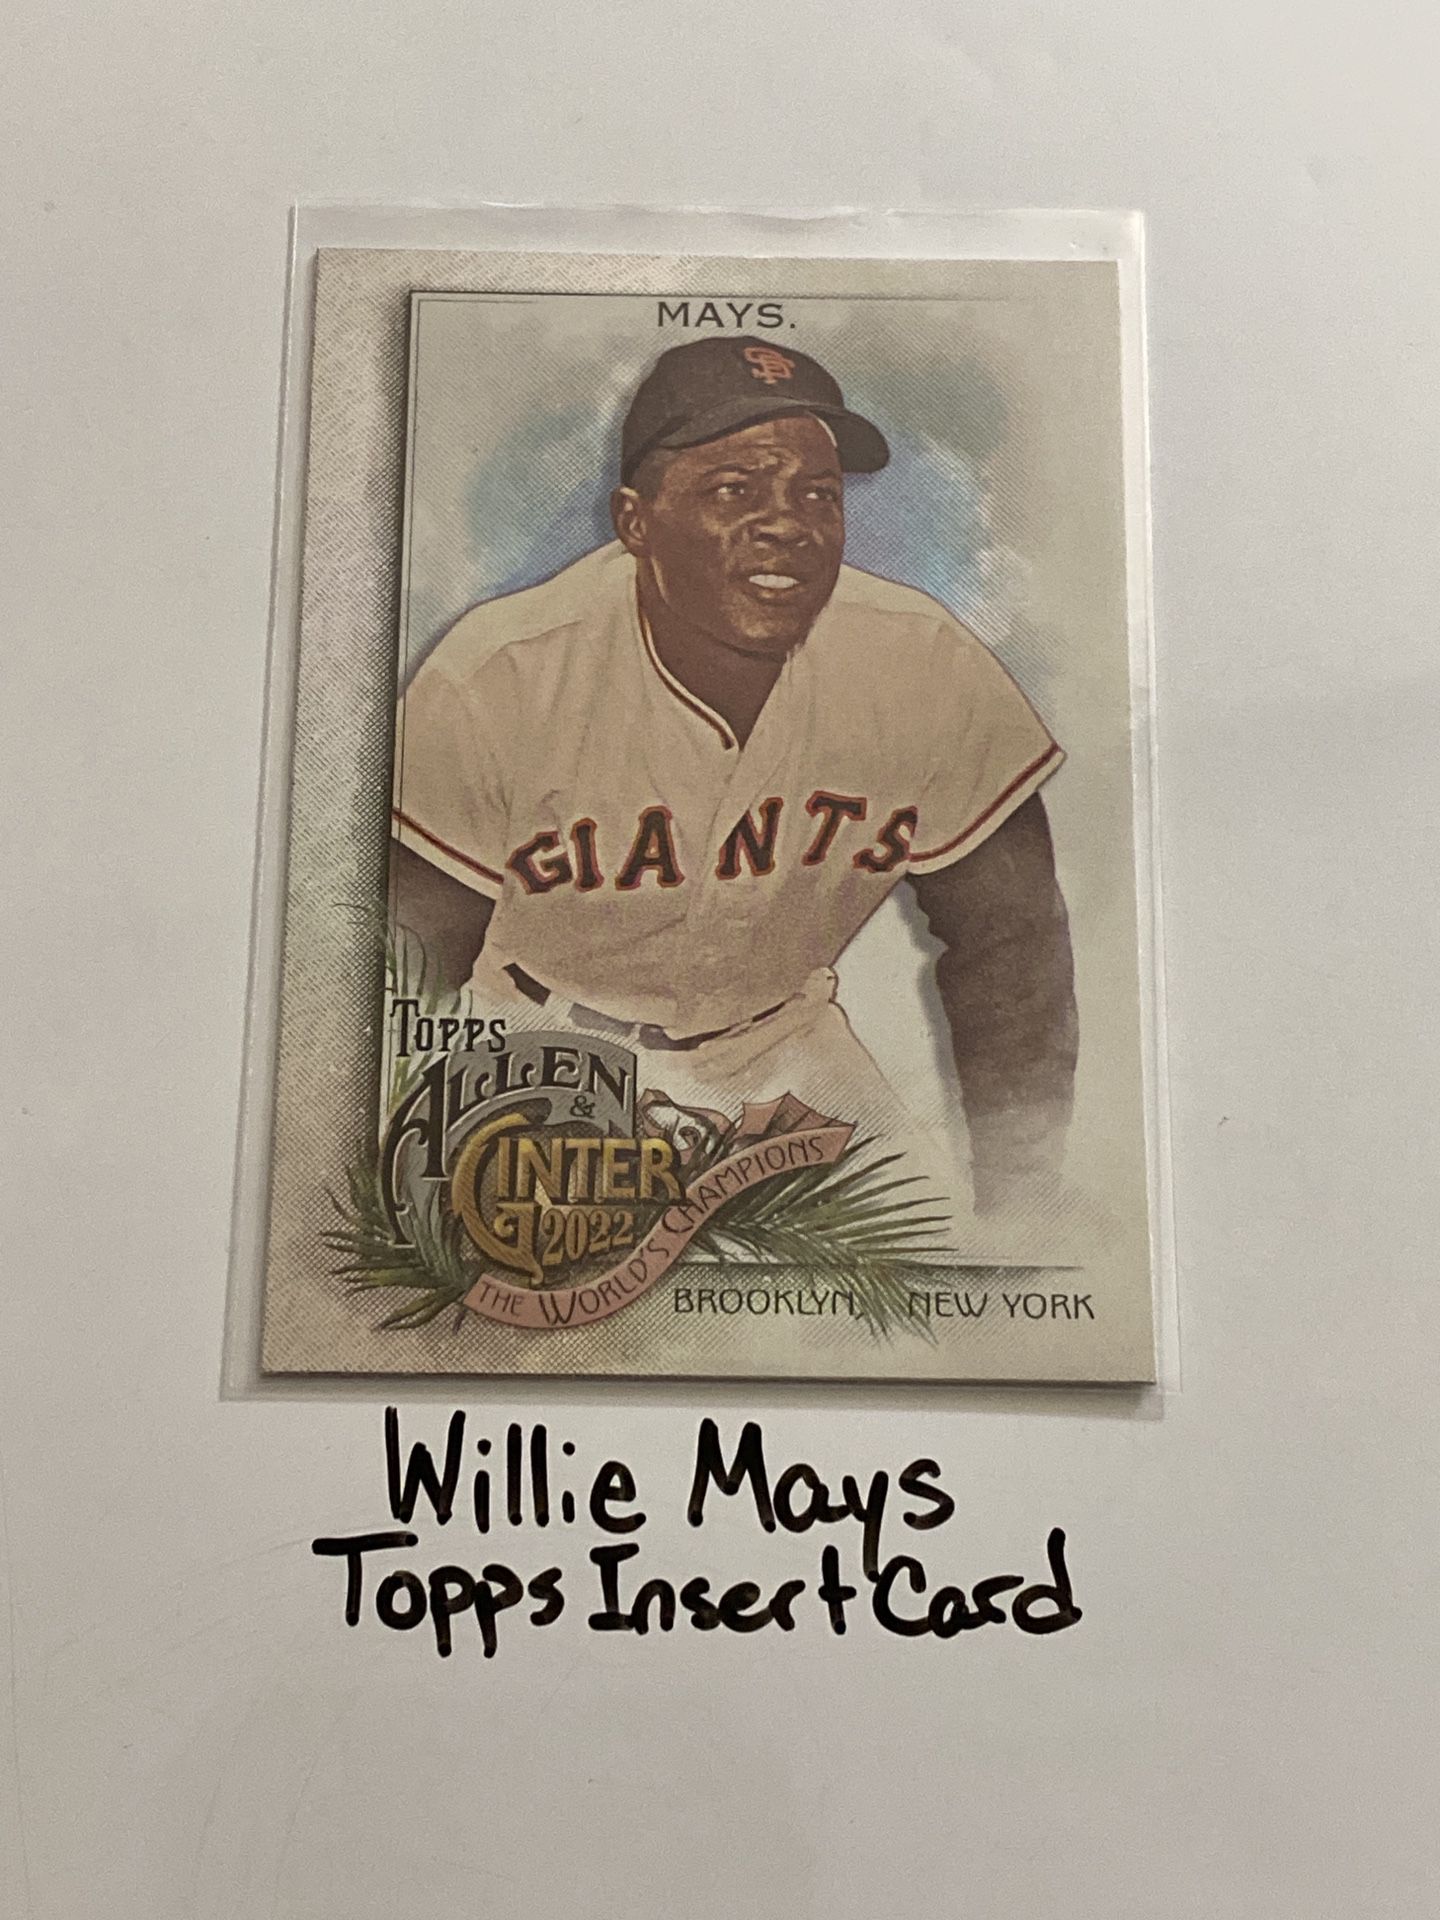 Willie Mays San Francisco Giants Hall of Fame Centerfielder Topps Short Print Insert Card. 